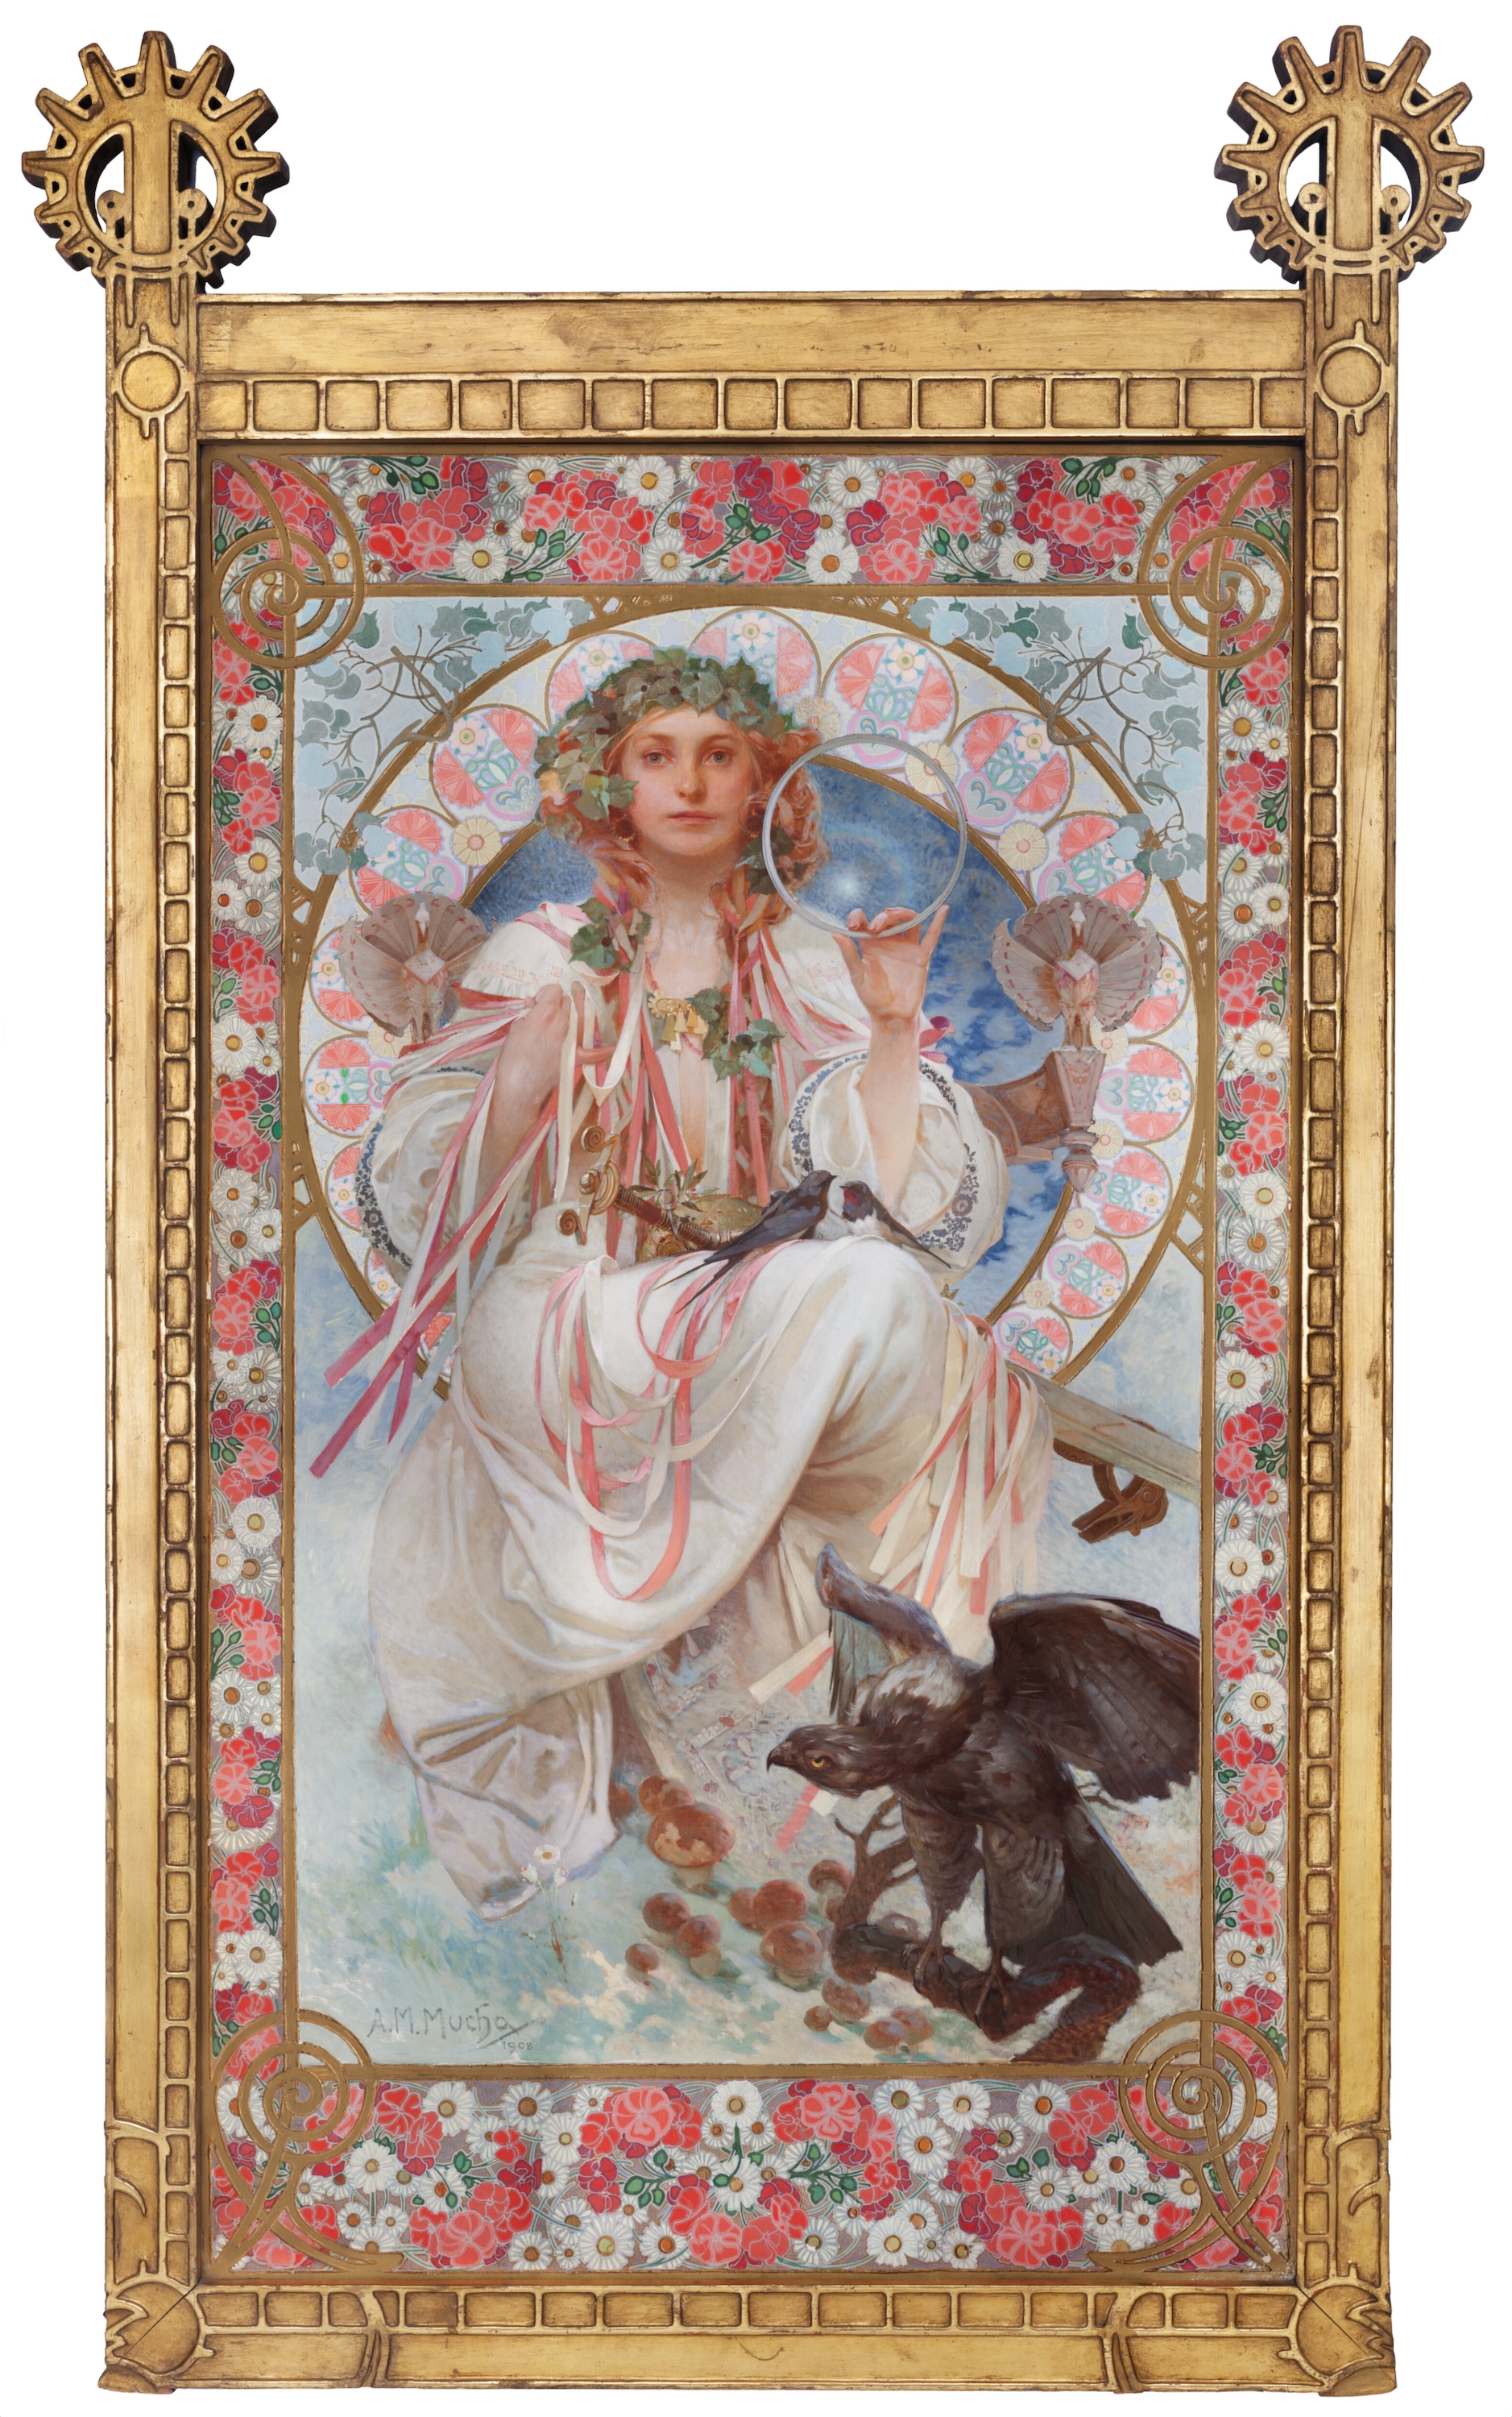 Retrato de Josephine Crane-Bradley como Slavia by Alphonse Mucha - 1908 - 154 x 92,5 cm Národní galerie v Praze